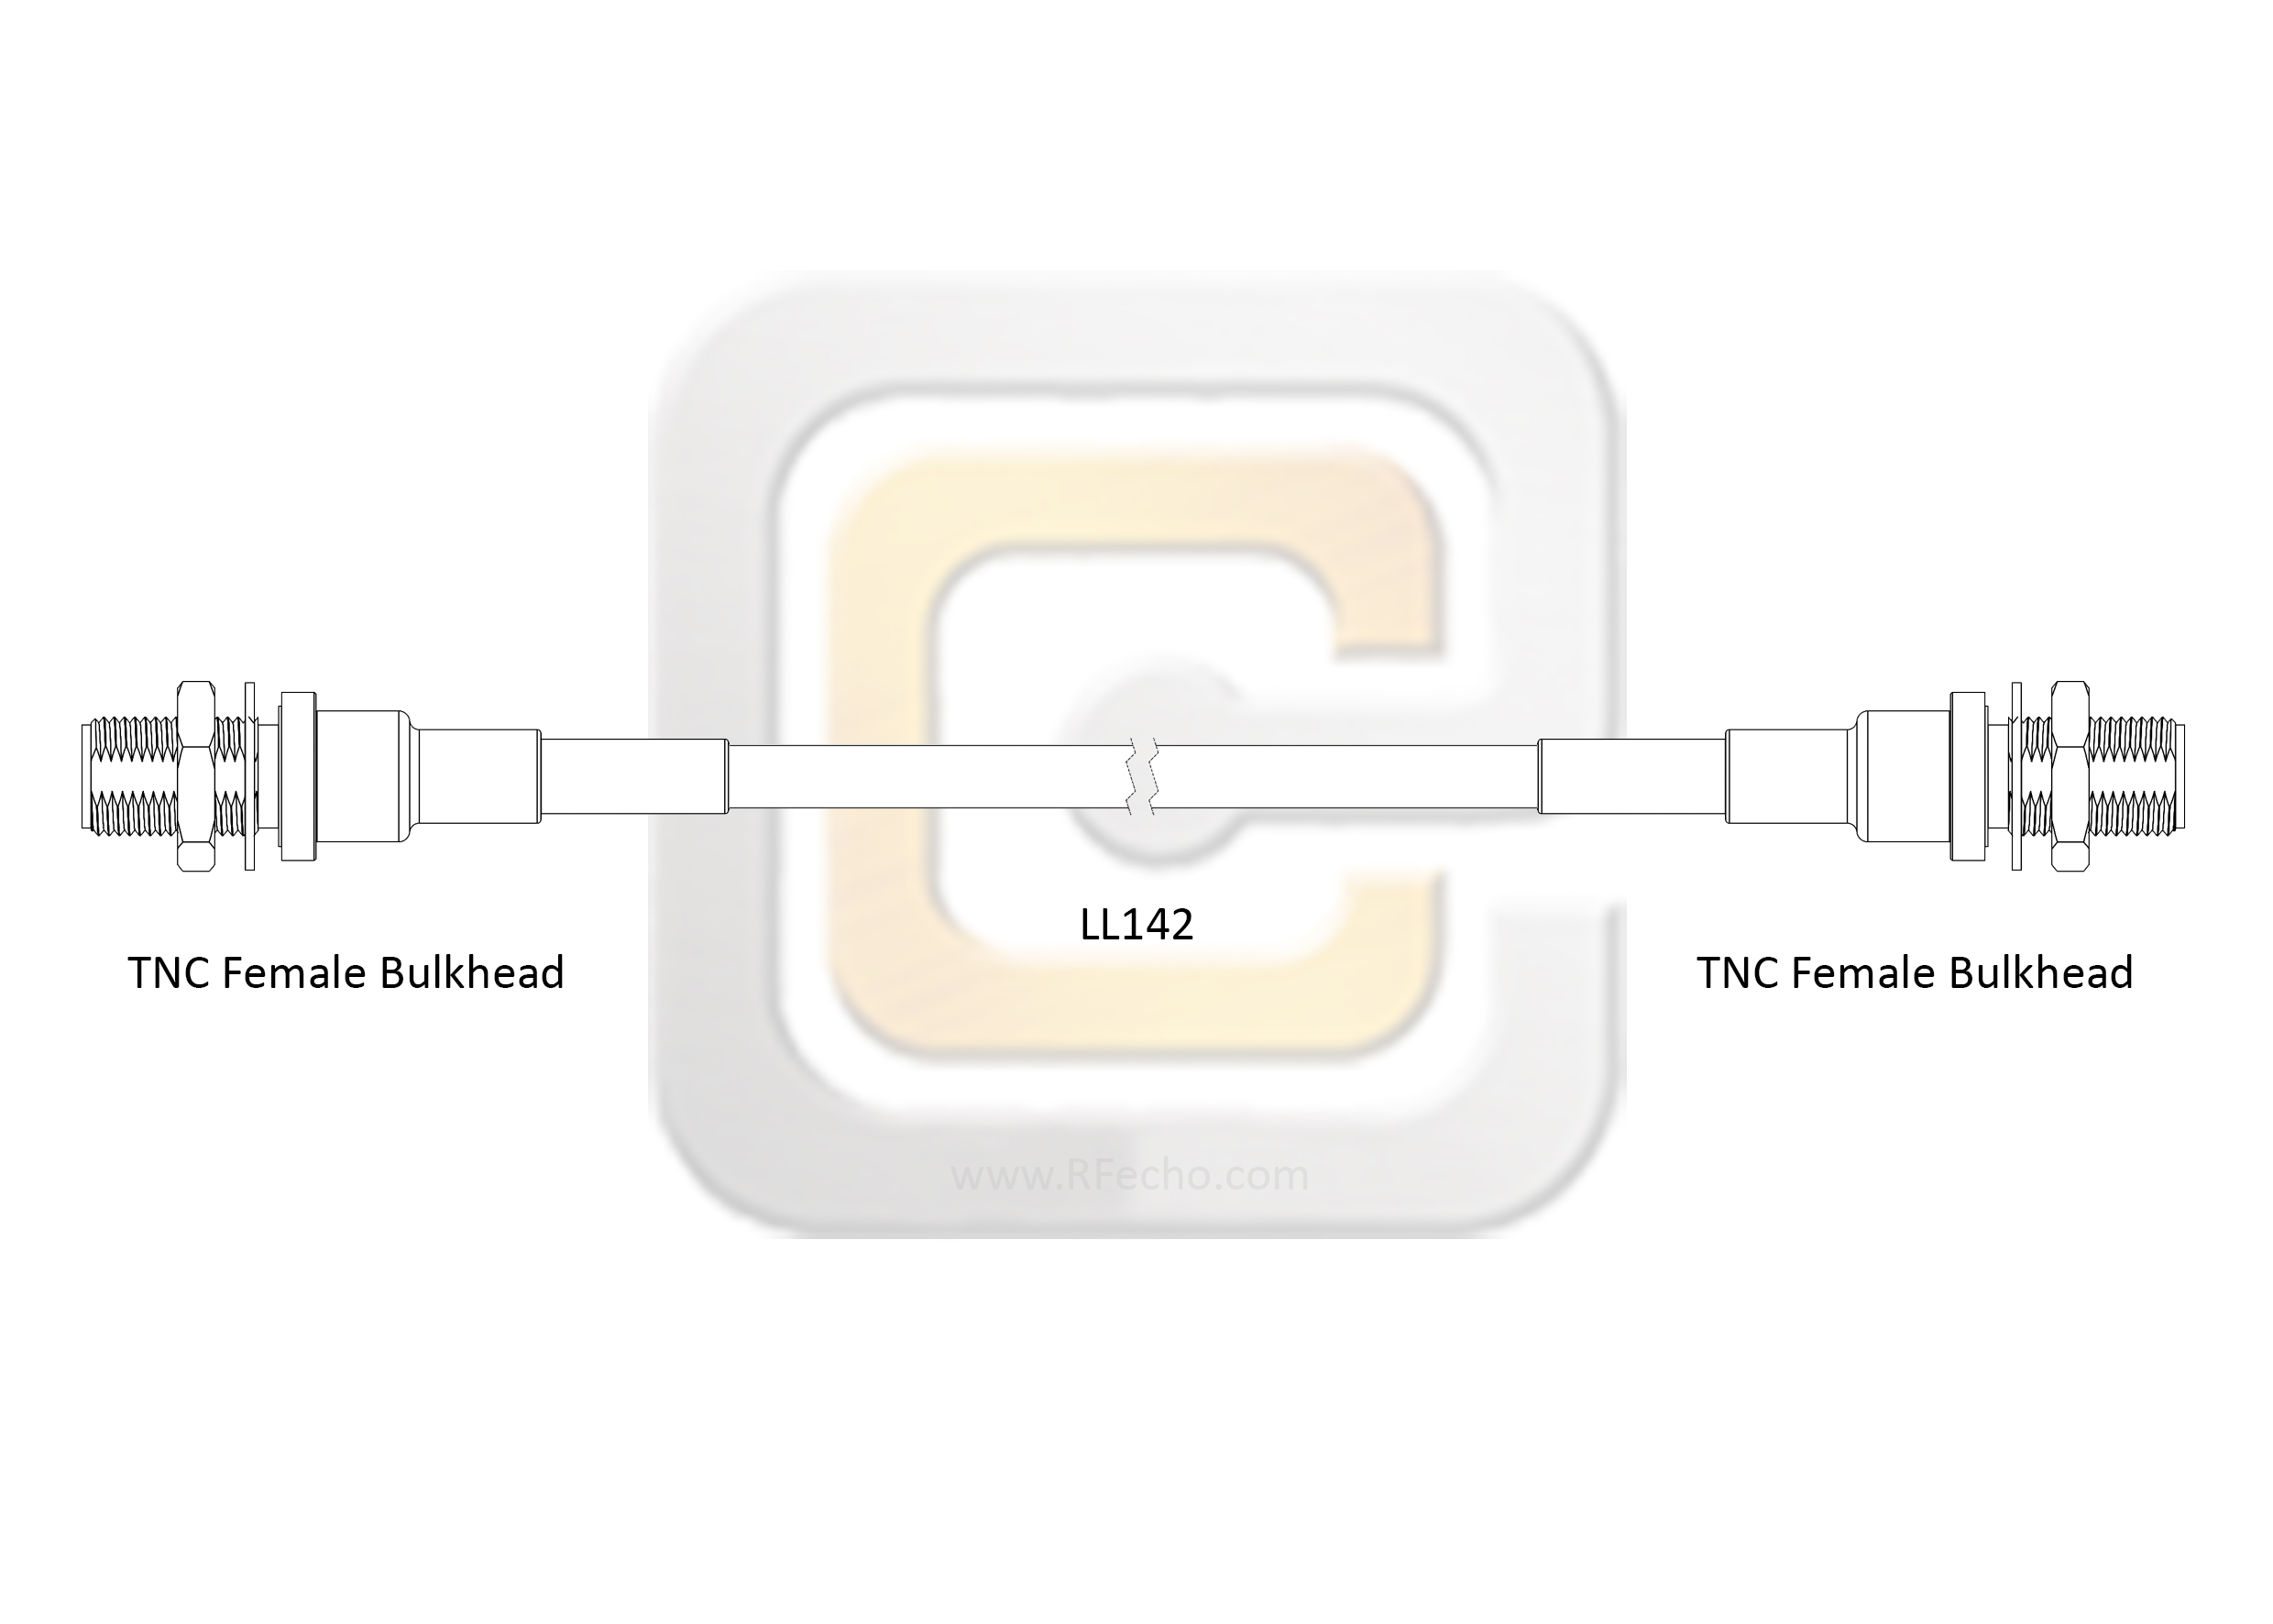 Low Loss TNC Female Bulkhead to TNC Female Bulkhead, 11 GHz,  LL142 Coax and RoHS